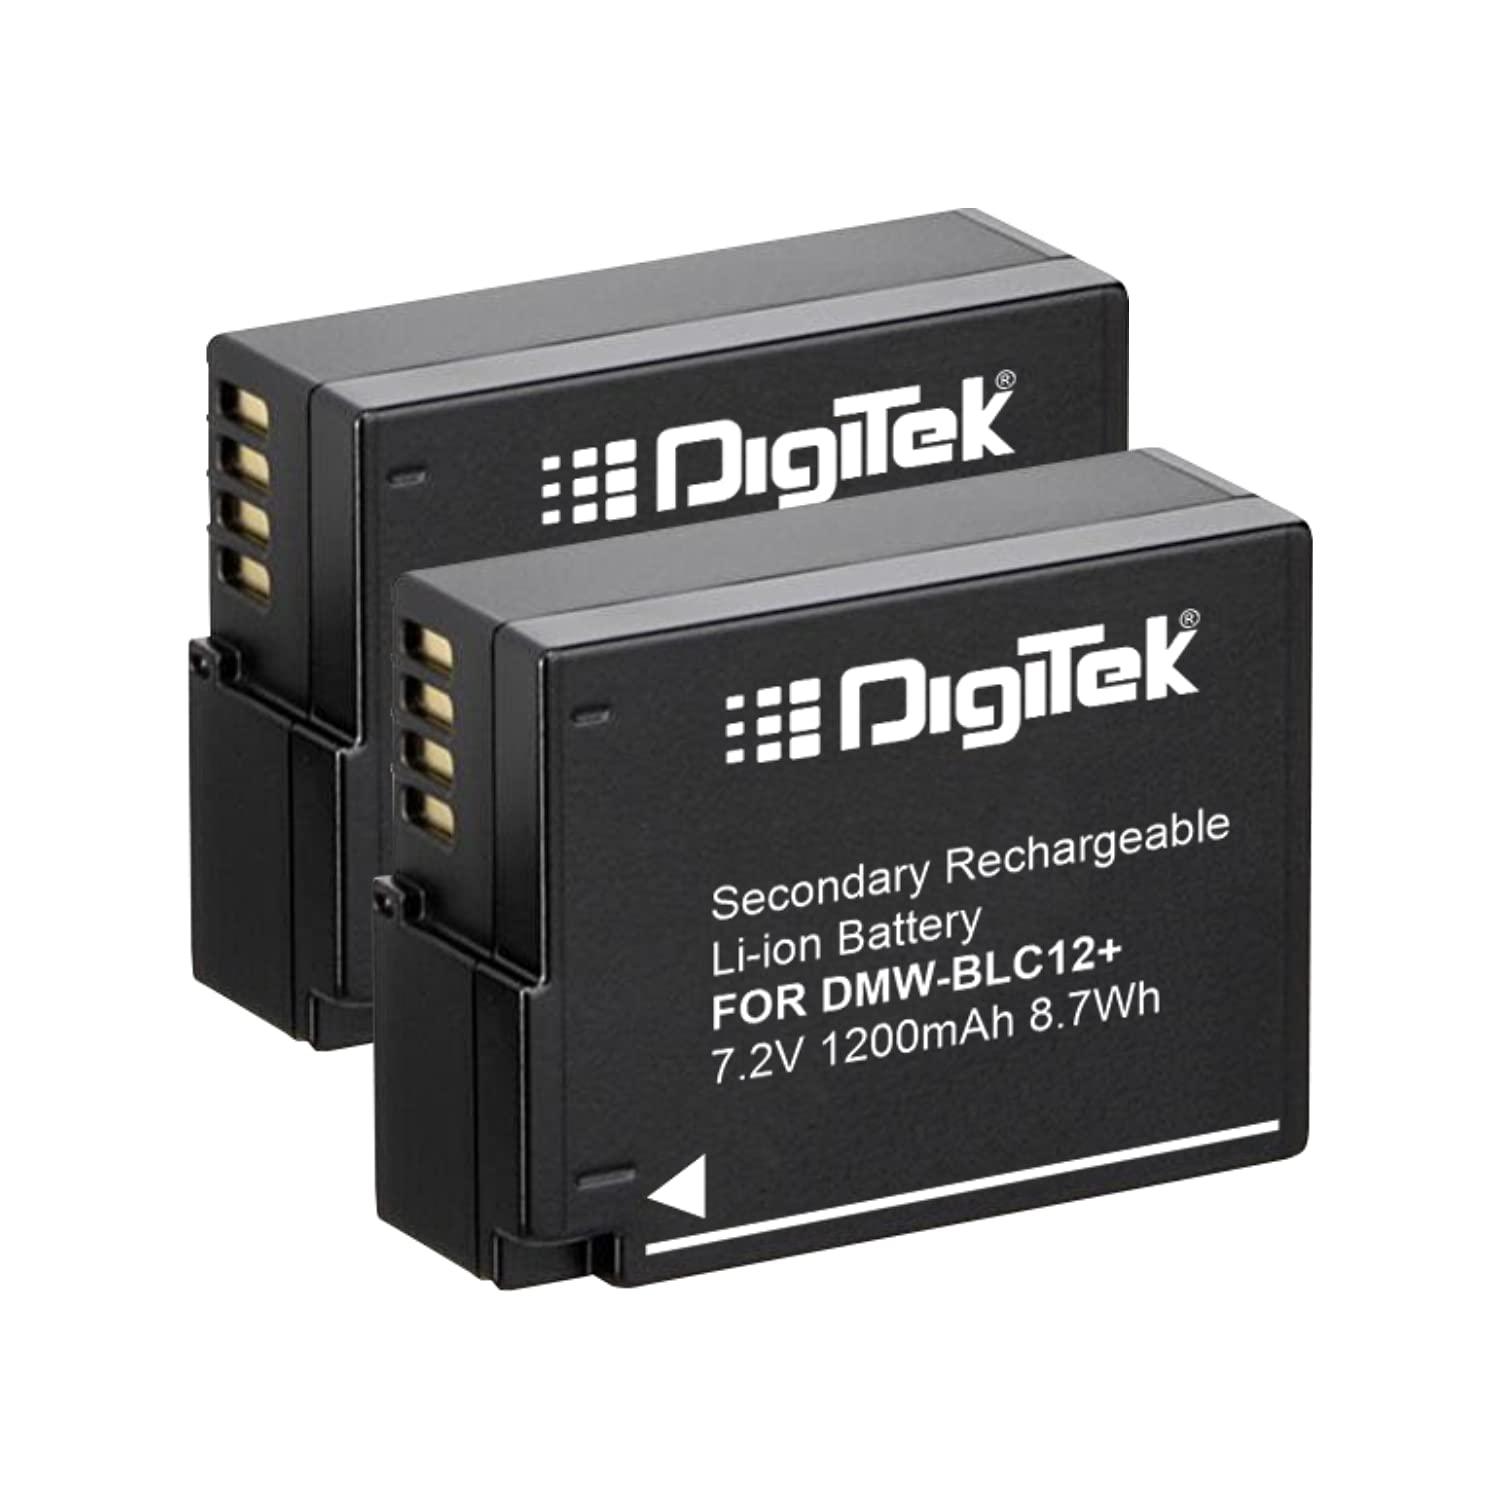 Digitek (DMW-BLC12+) Secondary Li-ion Rechargeable Battery for DMW-BLC12+ (7.2V, 1200mAh) - Digitek